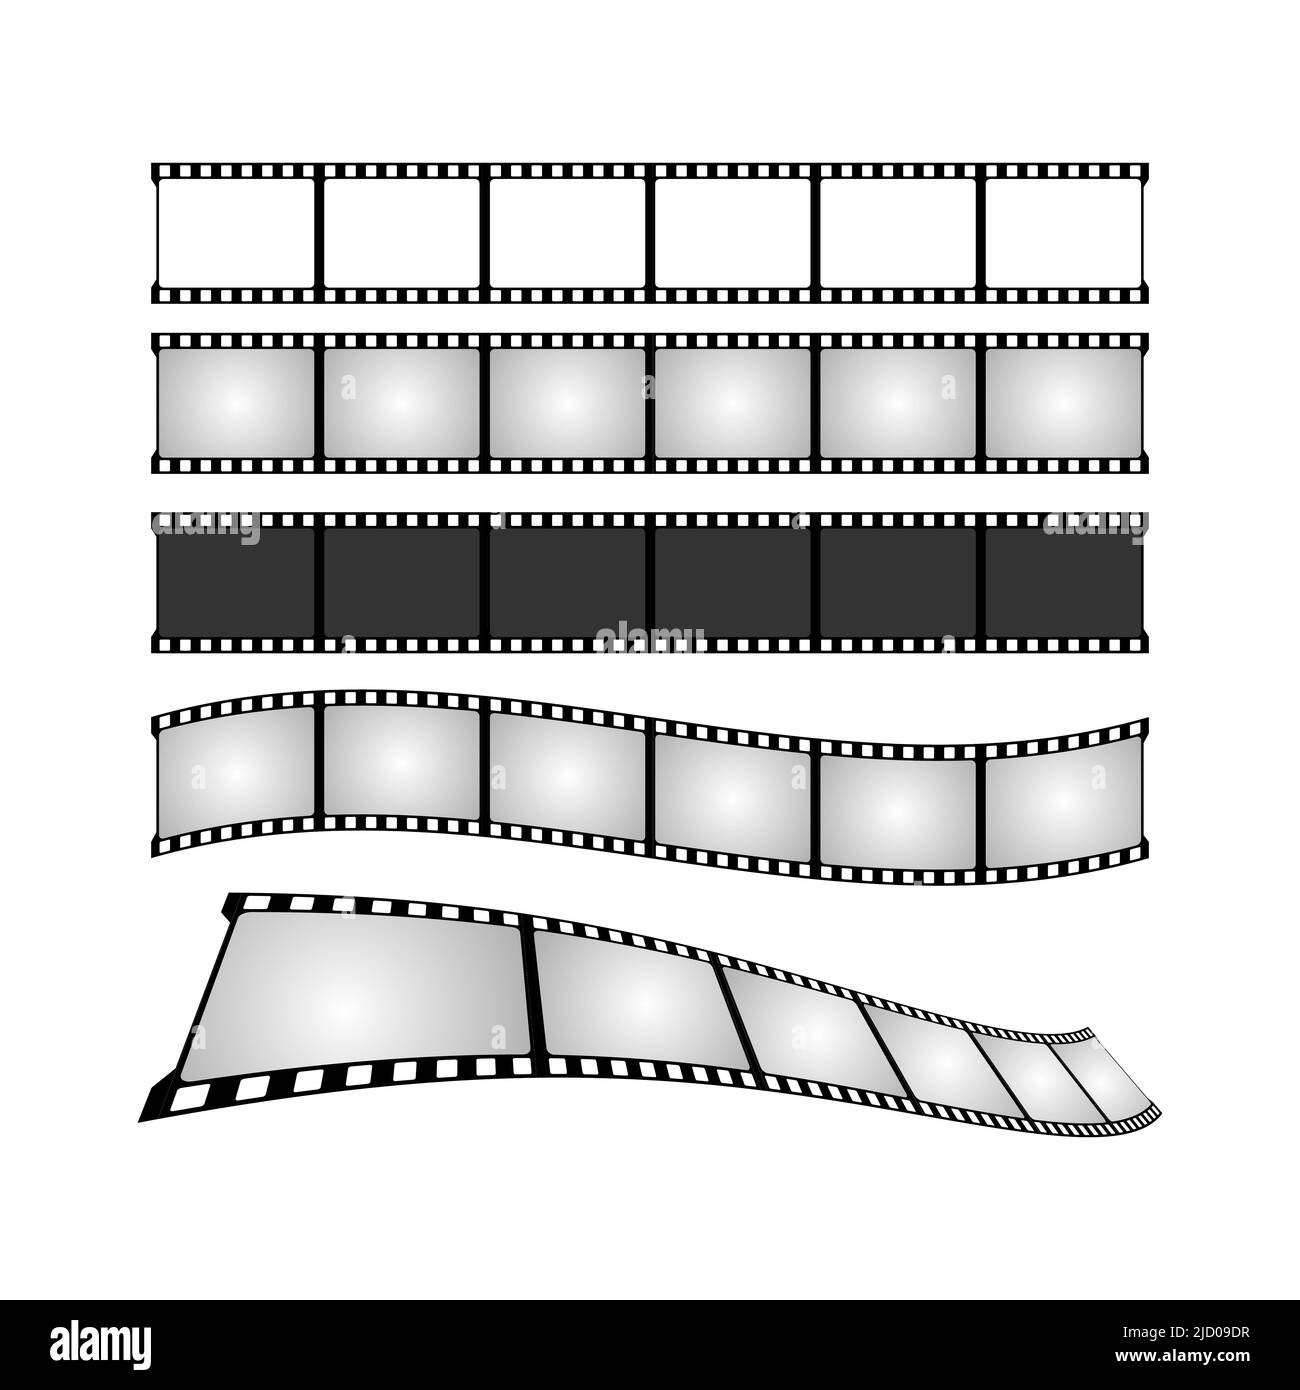 Movie tape set illustration. Cinema poster concept. Banner design for movie theater. Stock Vector